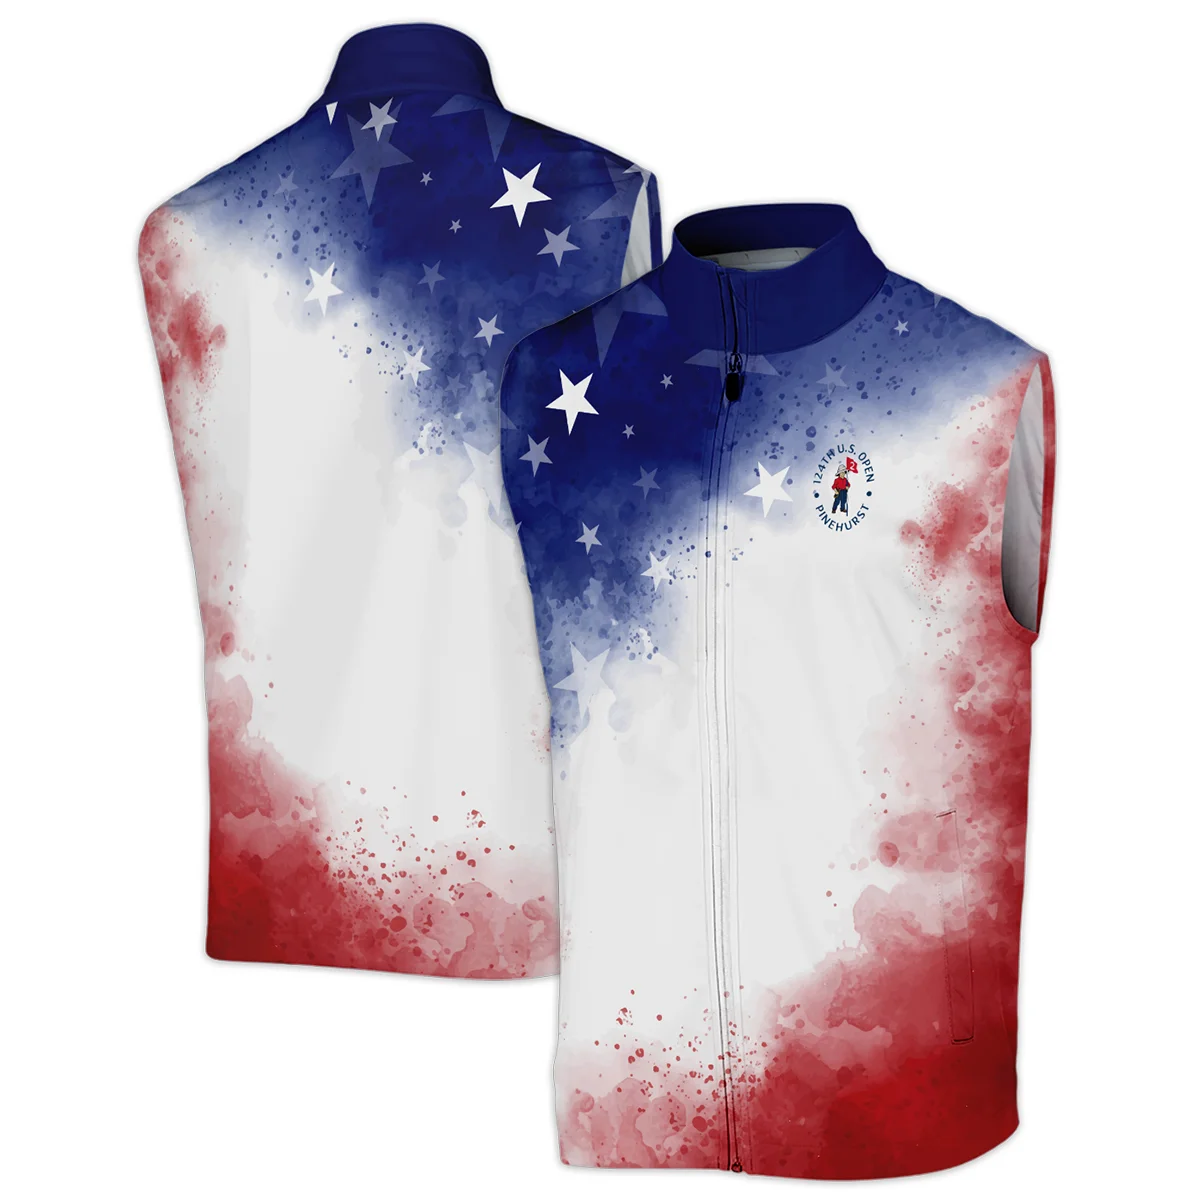 124th U.S. Open Pinehurst Titleist Blue Red Watercolor Star White Backgound Polo Shirt Mandarin Collar Polo Shirt